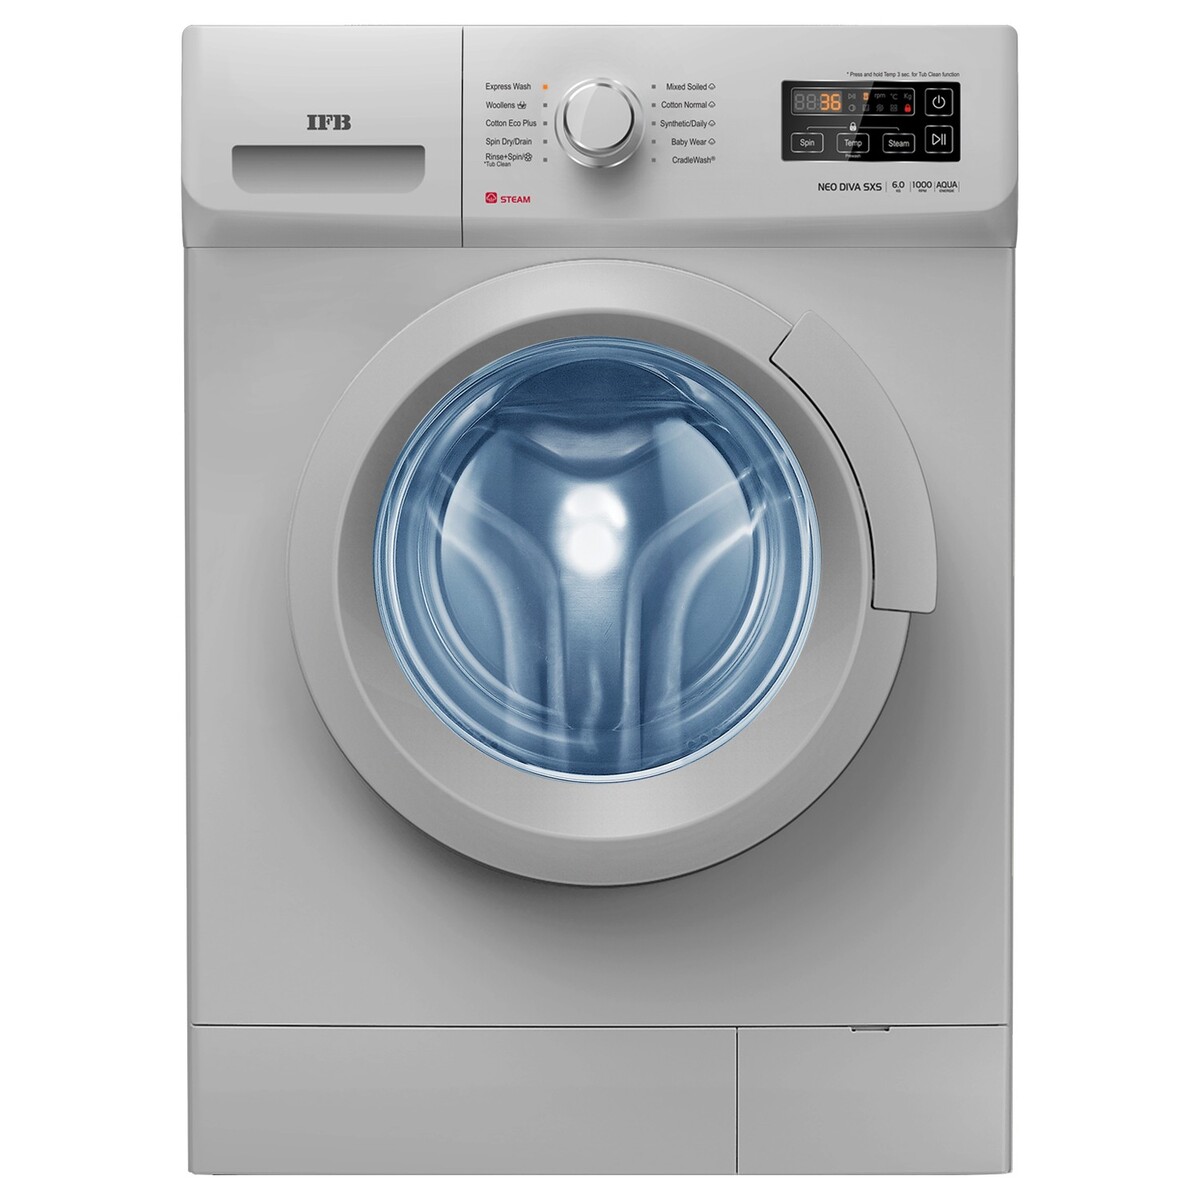 IFB Front Load Washing Machine Neo Diva SXS 6kg